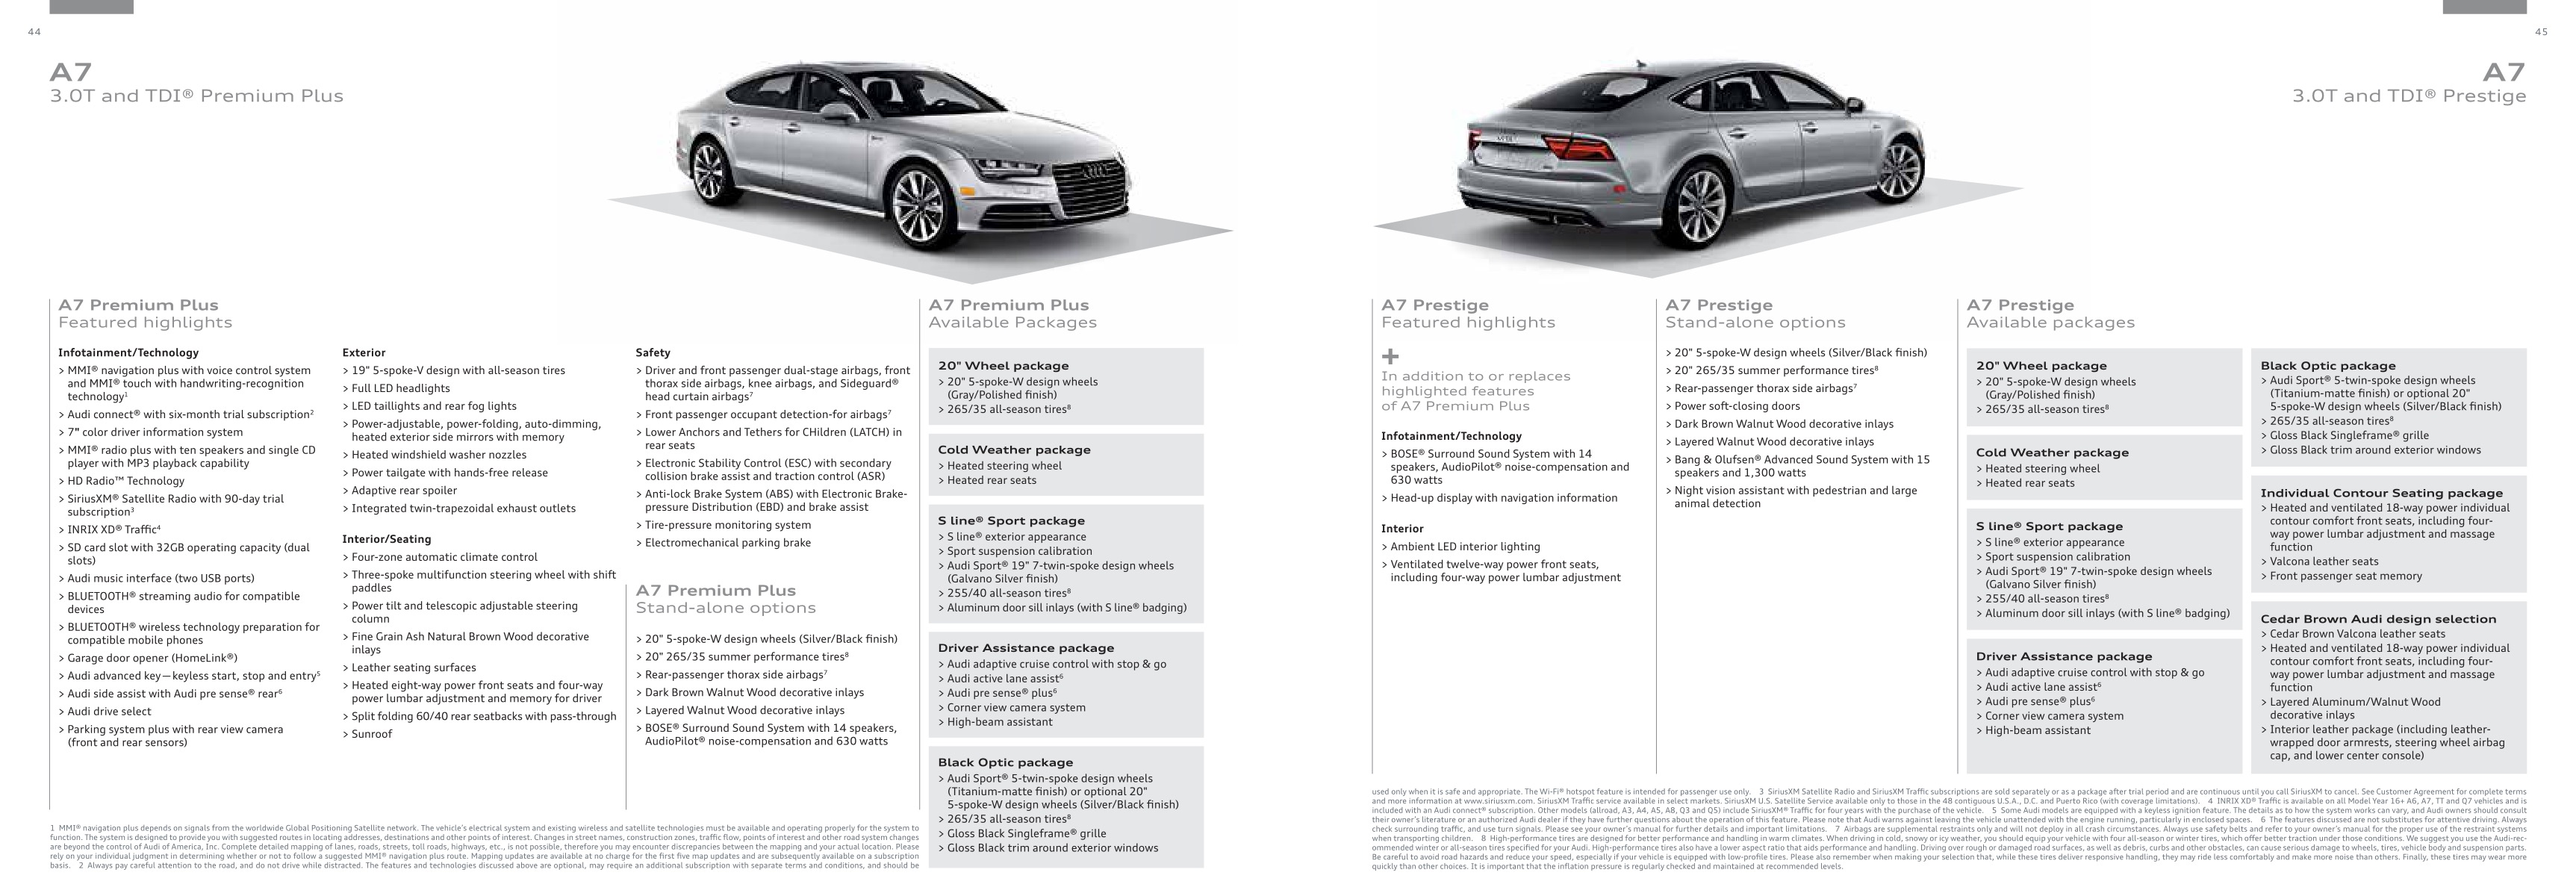 2016 Audi A7 Brochure Page 5